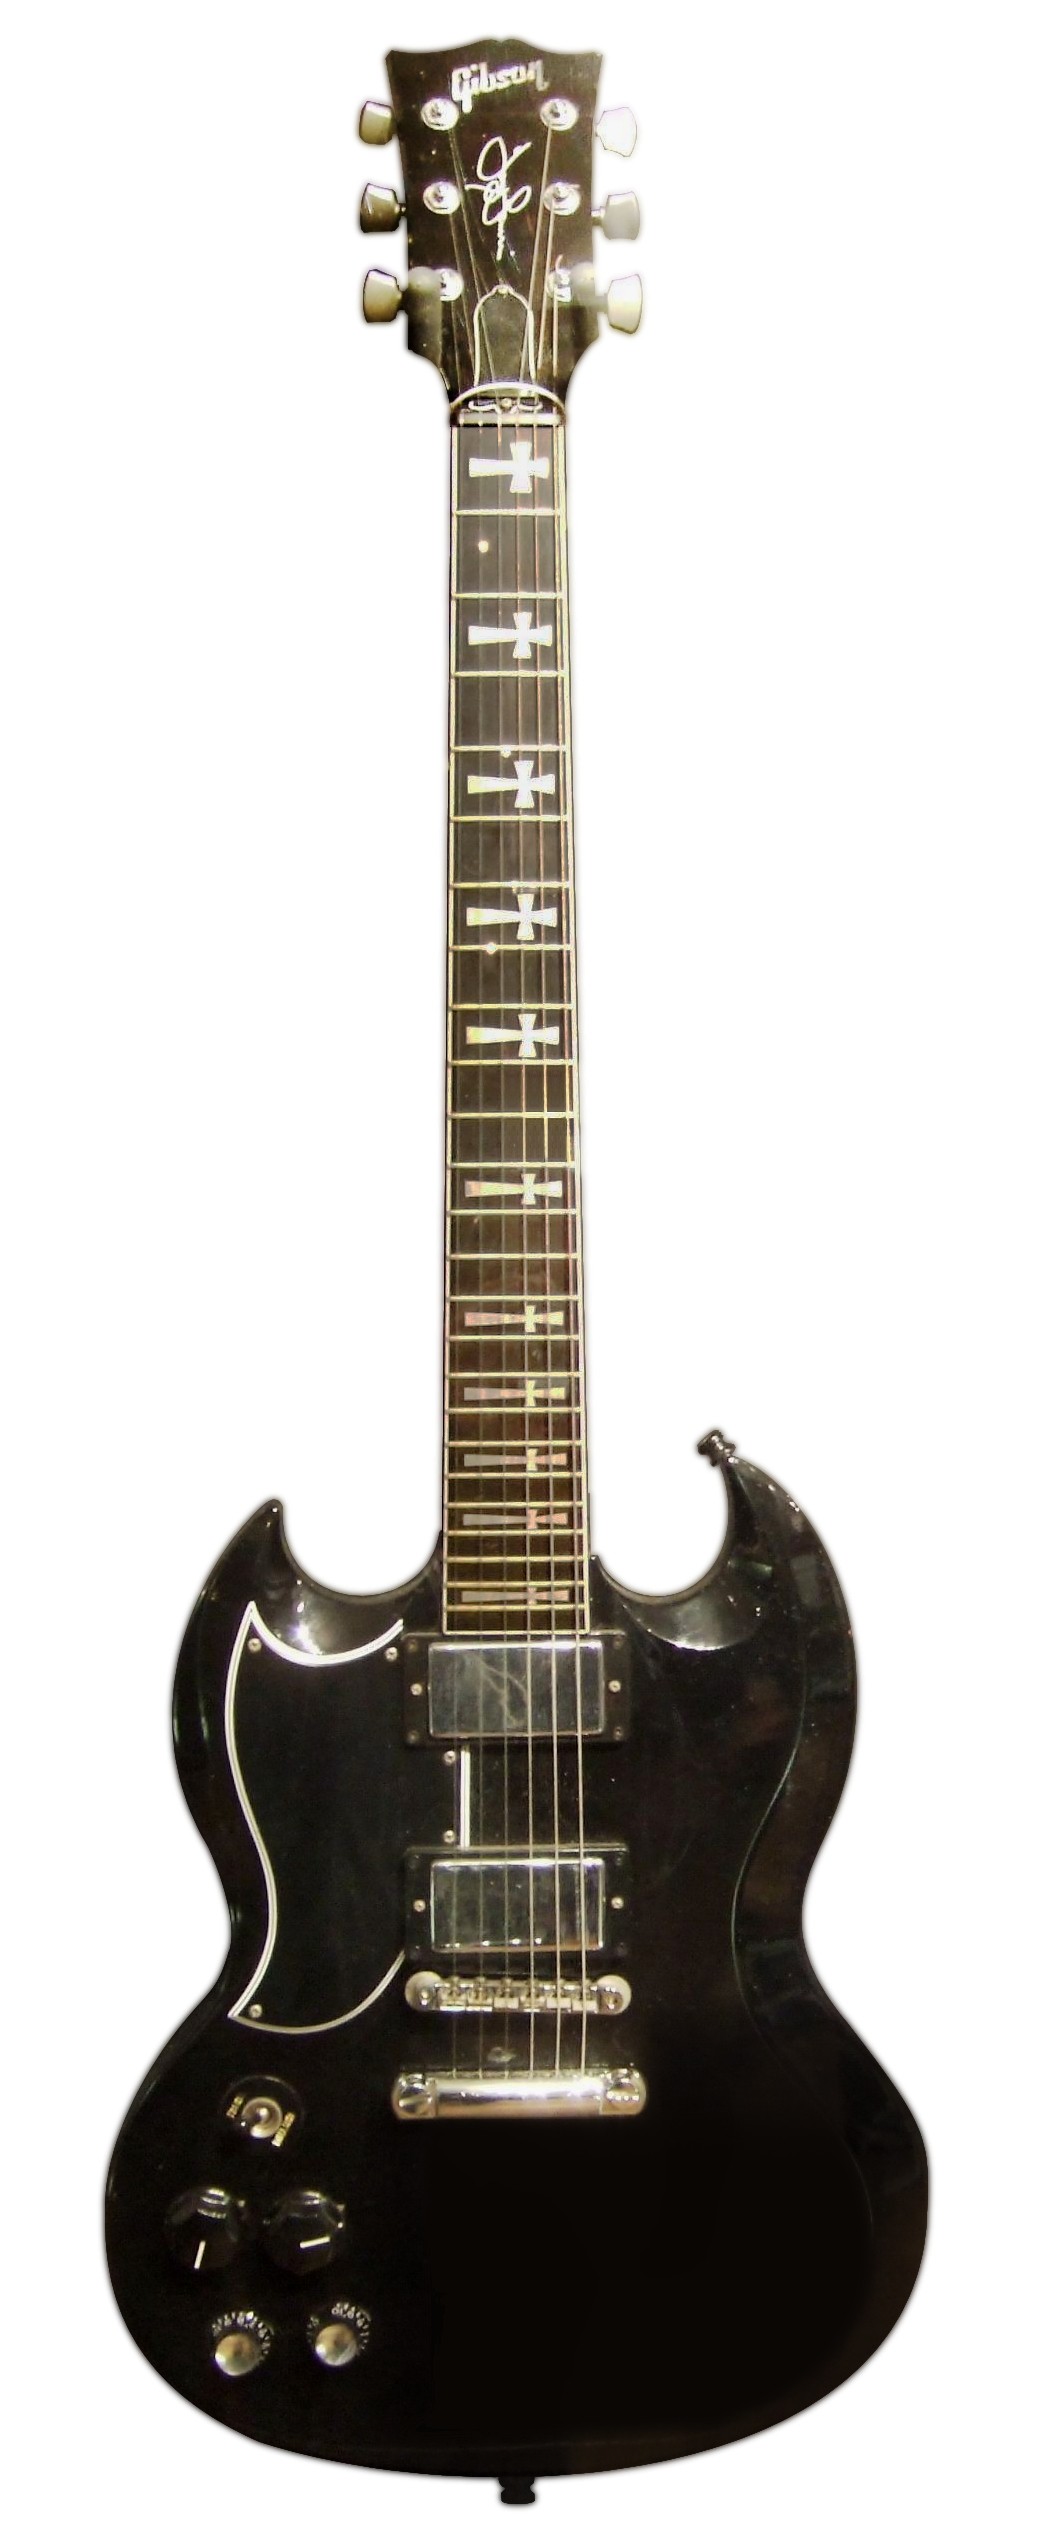 Iommi_sg_guitar.jpg